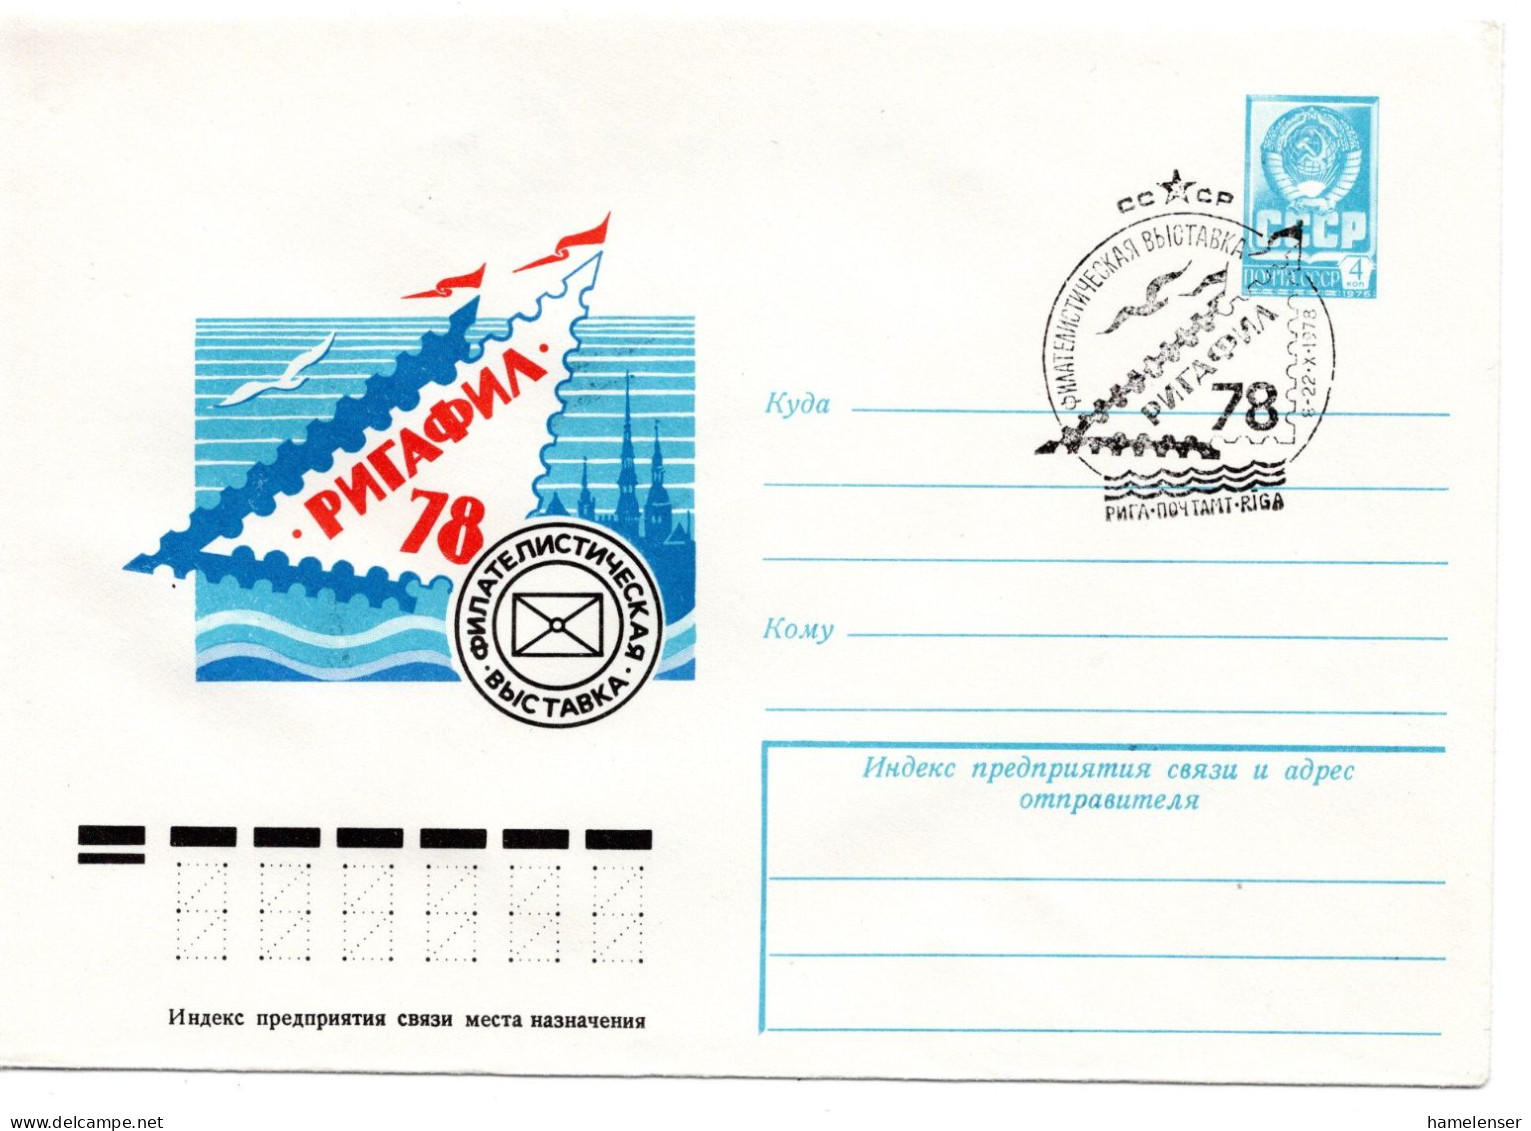 63984 - Russland / UdSSR - 1978 - 4K GAU "RIGAFIL 78" SoStpl RIGA - AUSSTELLUNG RIGAFIL 78 - Briefmarkenausstellungen